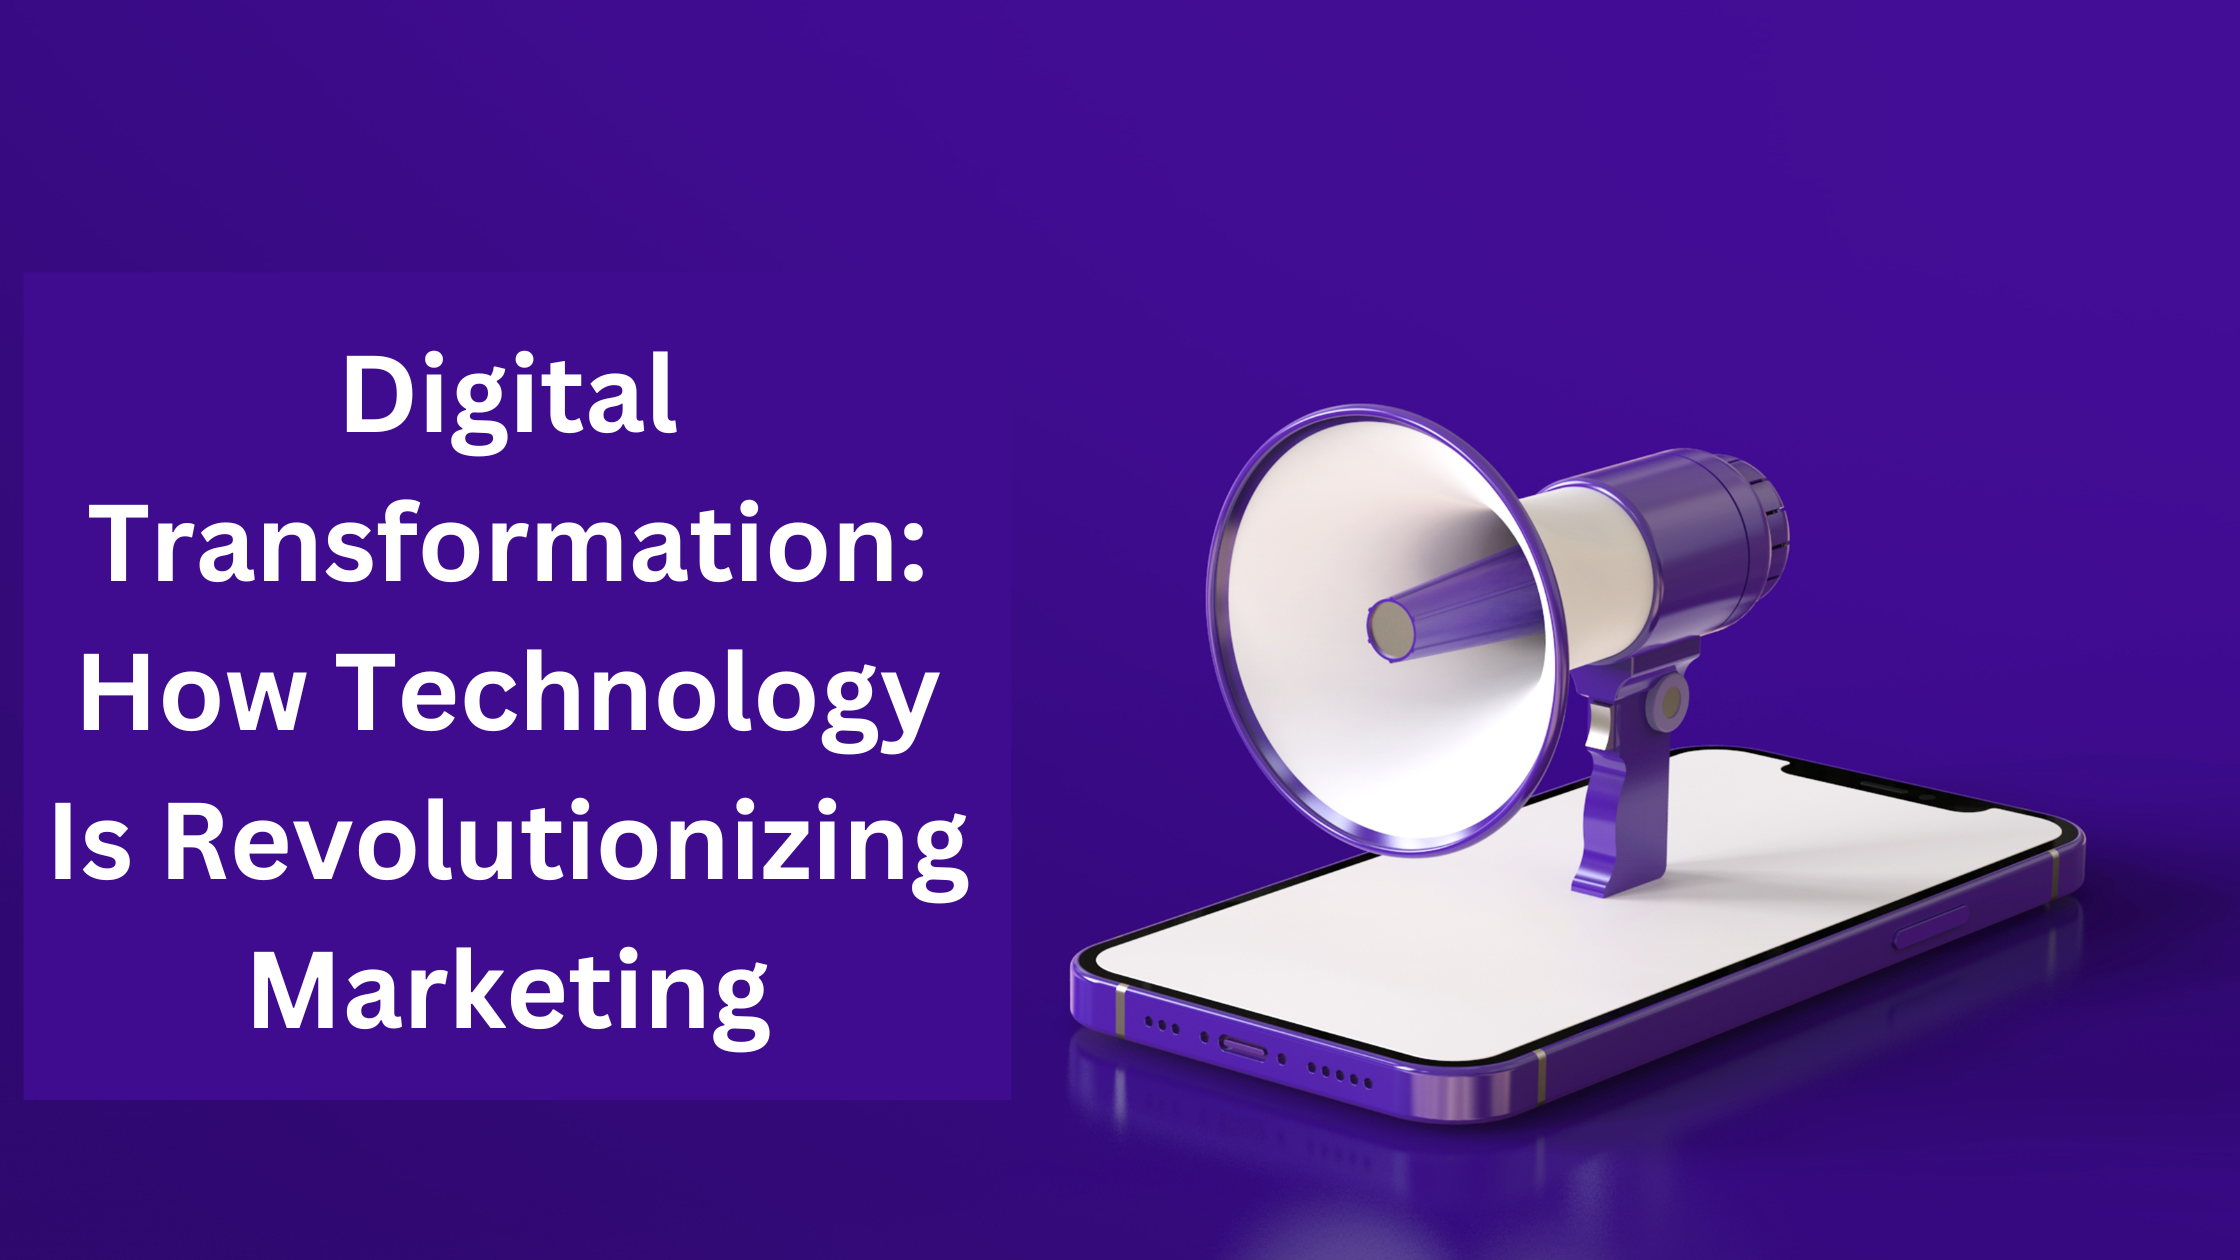 Digital Transformation: How Technology Is Revolutionizing Marketing